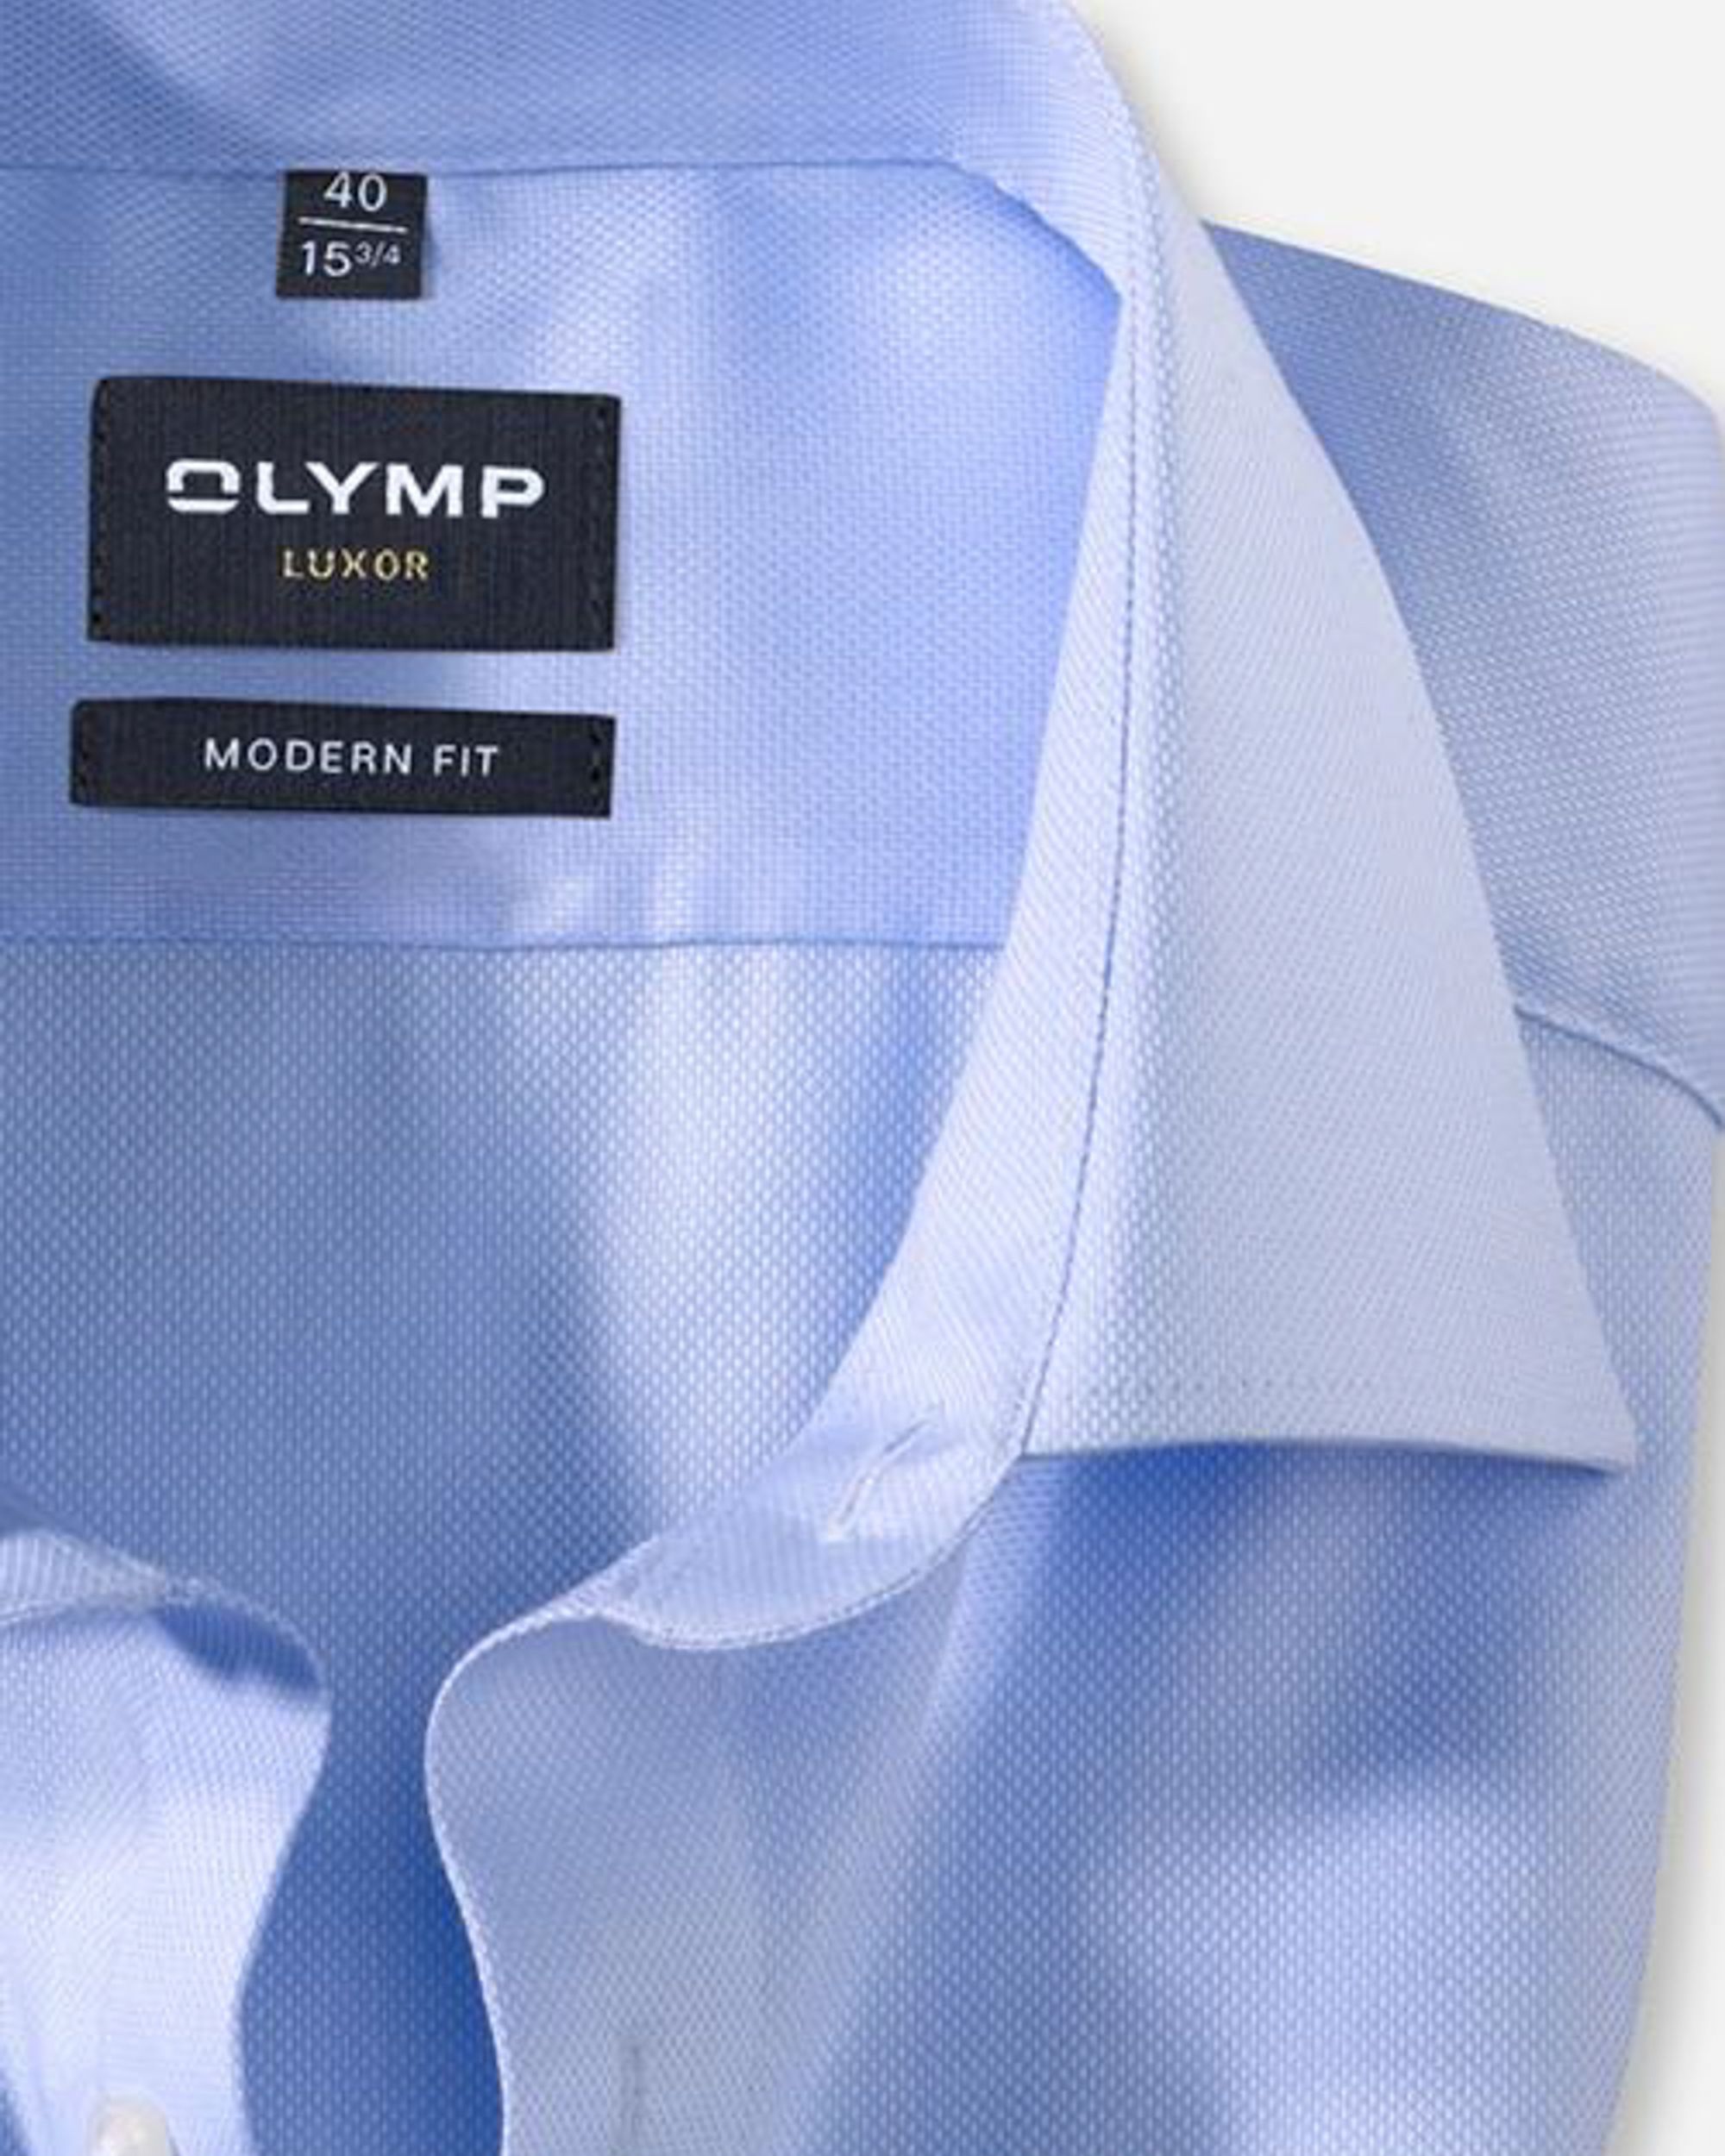 OLYMP Luxor Modern fit Overhemd LM Blauw 011604-32-37